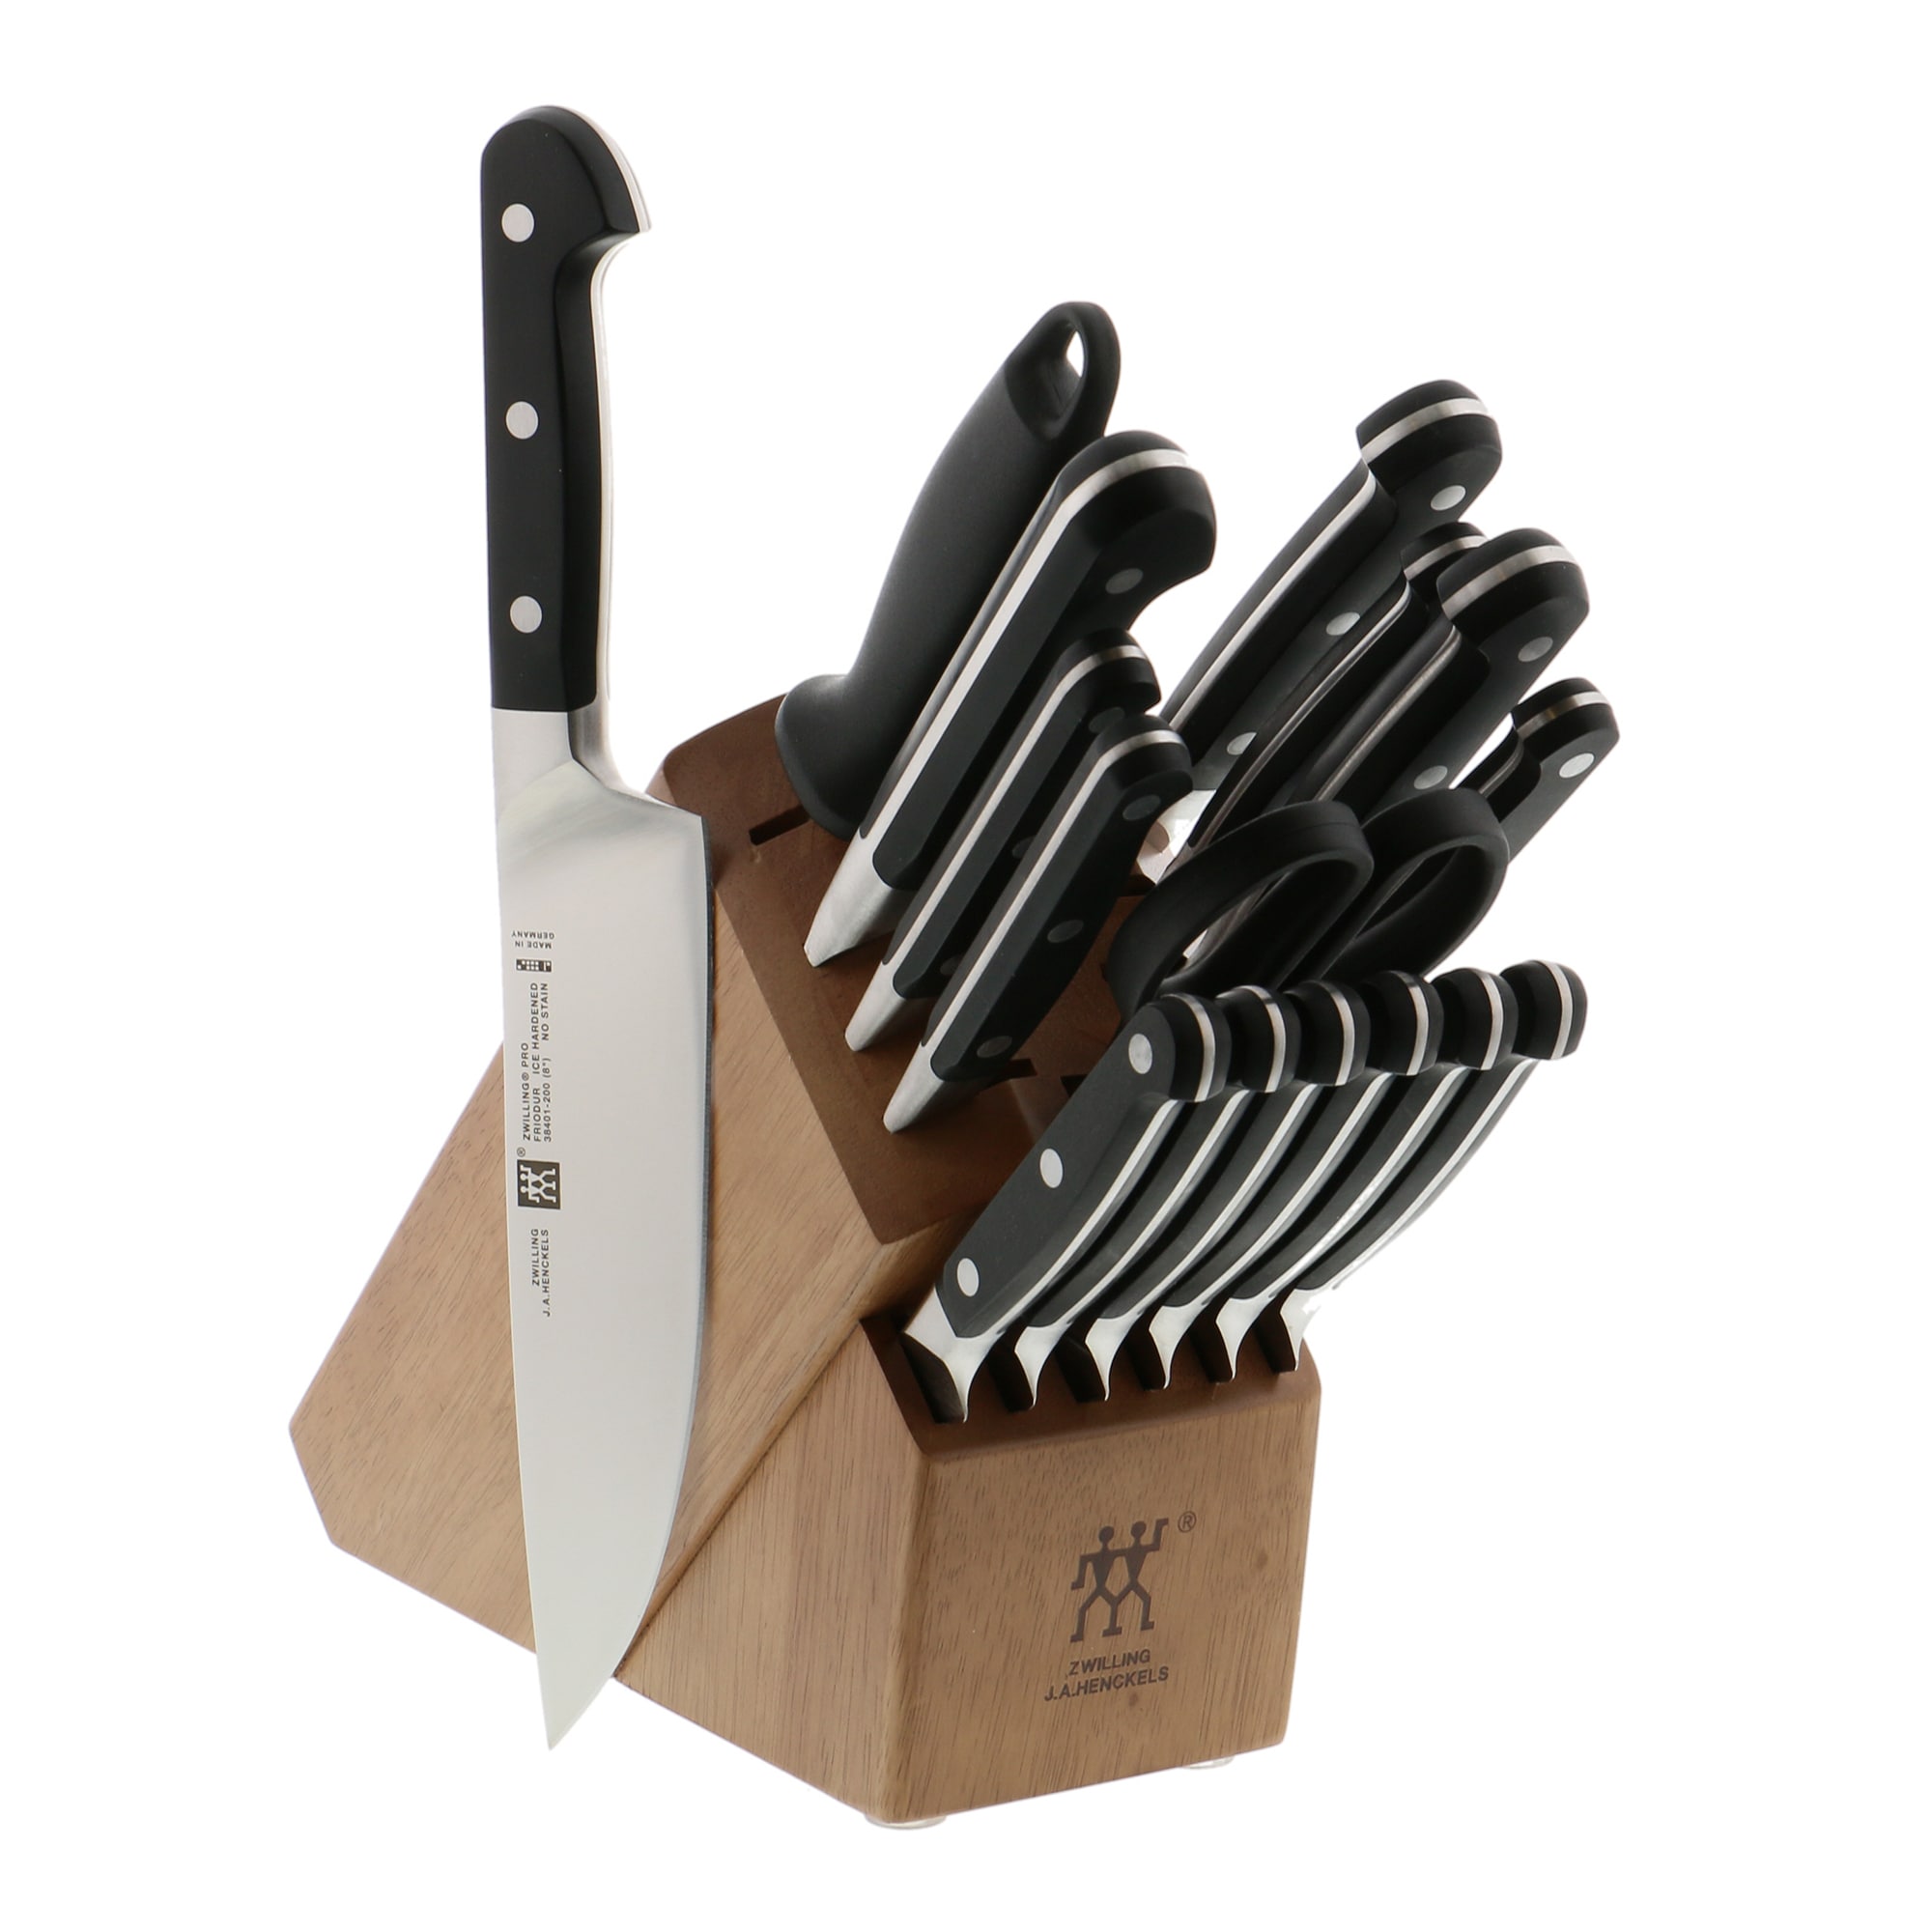 Knife Set, 23 Pcs Kitchen Knife Set with Block & Sharpener Rod, High Carbon Stainless Steel Chef Knife Set, Ultra Sharp, Full-Tang Design